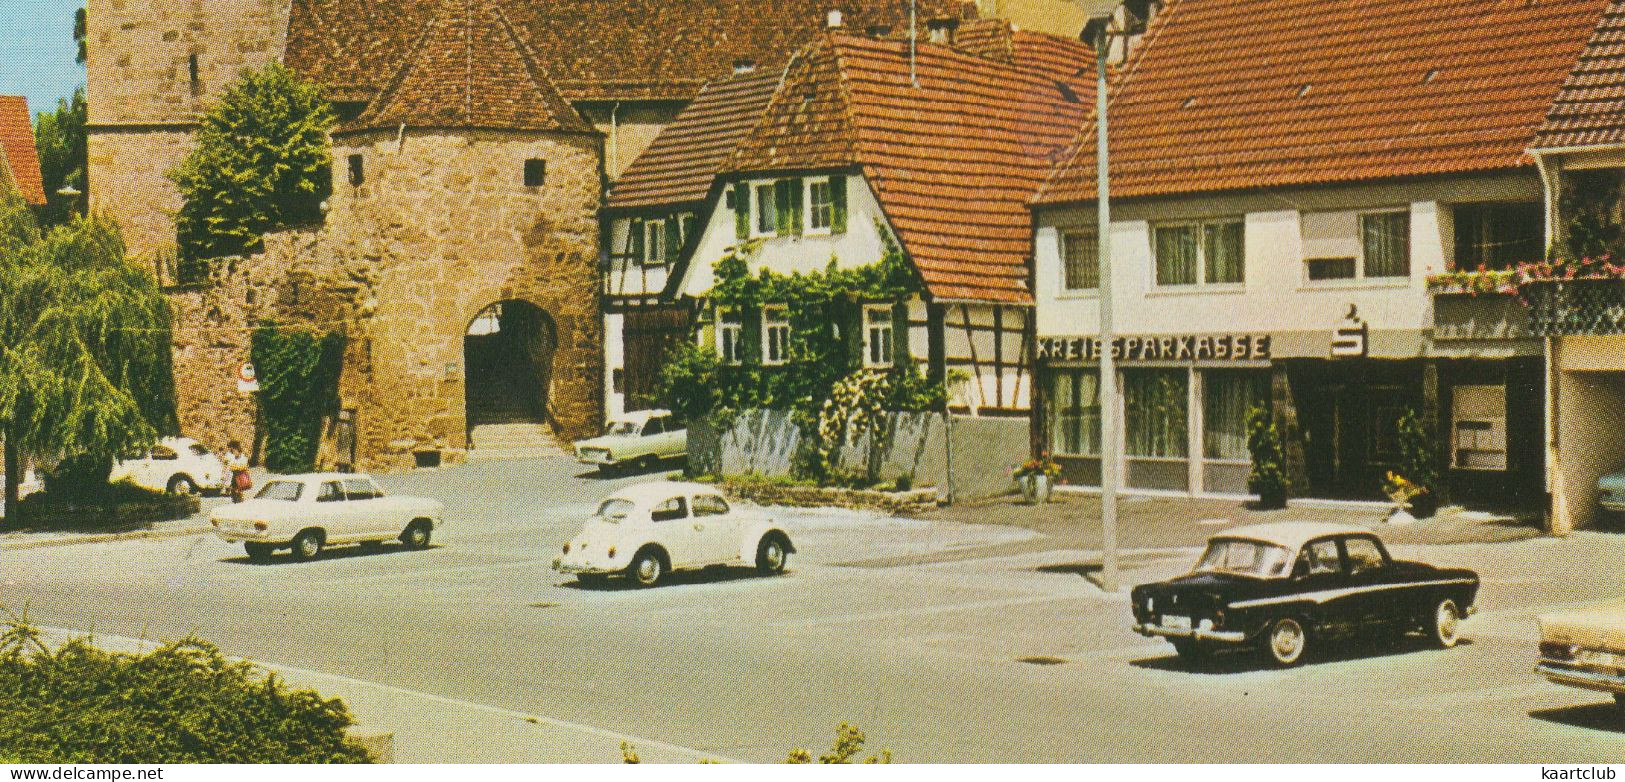 Beutelsbach: SIMCA ARONDE MONACO, VW 1200 KÄFER/COX, OPEL KADETT-B, DKW JUNIOR - Ev. Kirche - (Deutschland) - Turismo